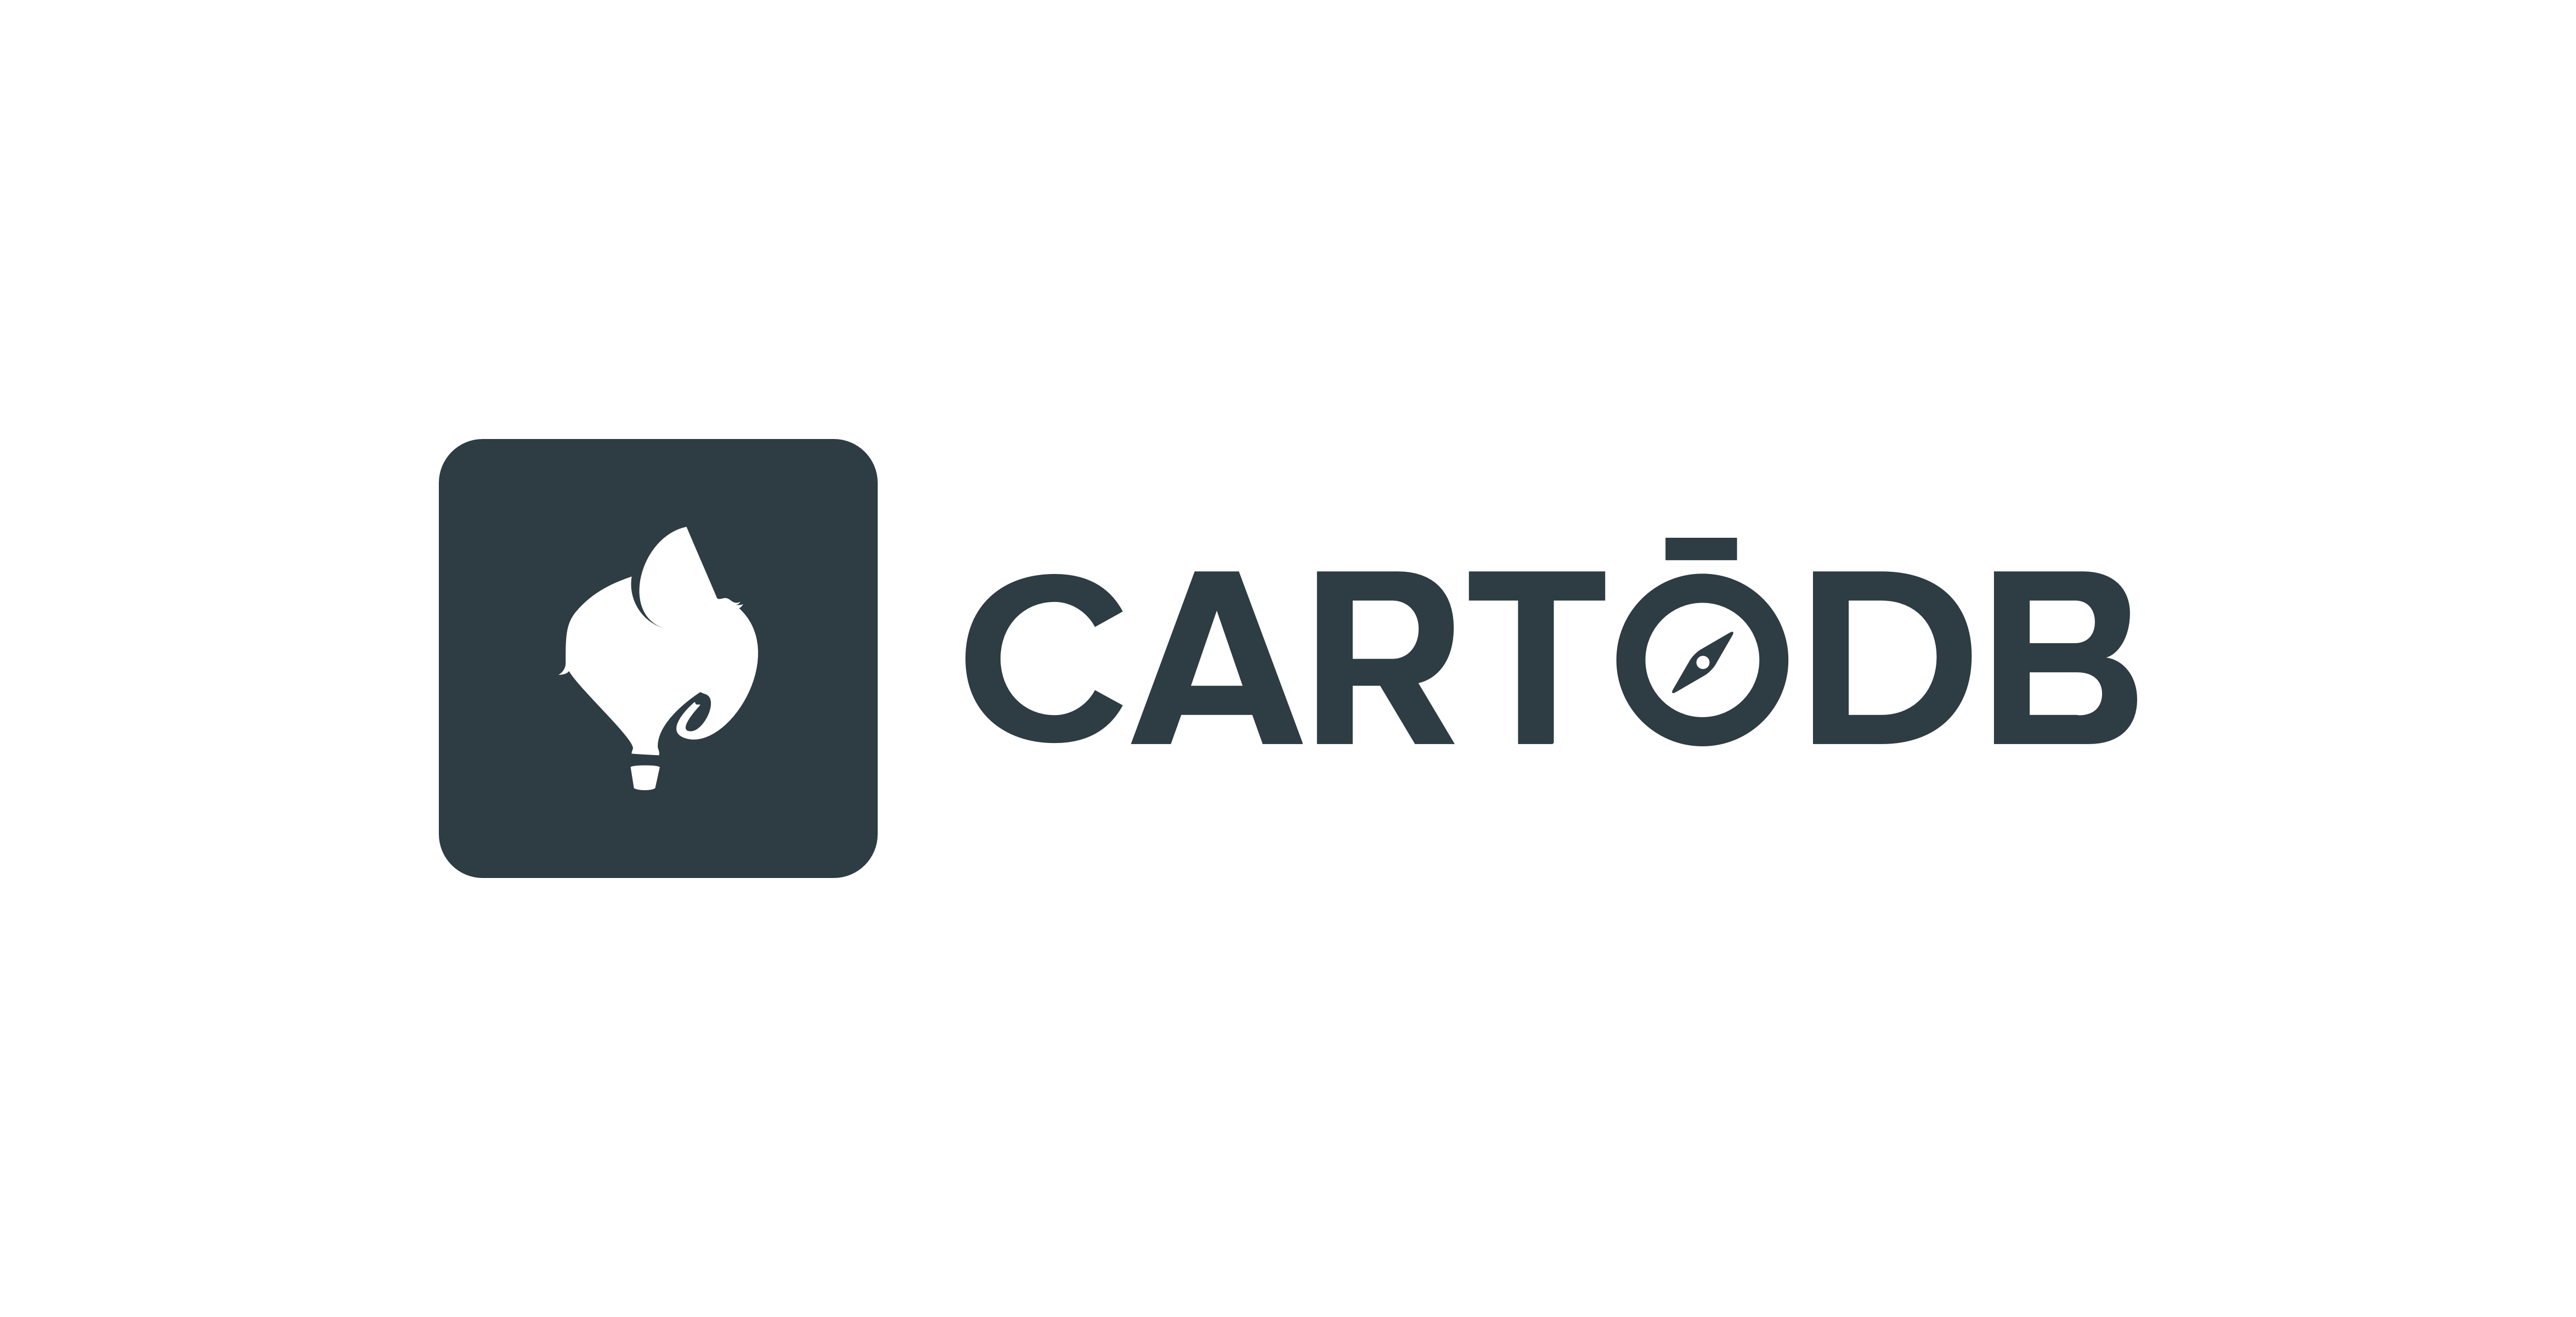 CartoDB Full Logo (3)